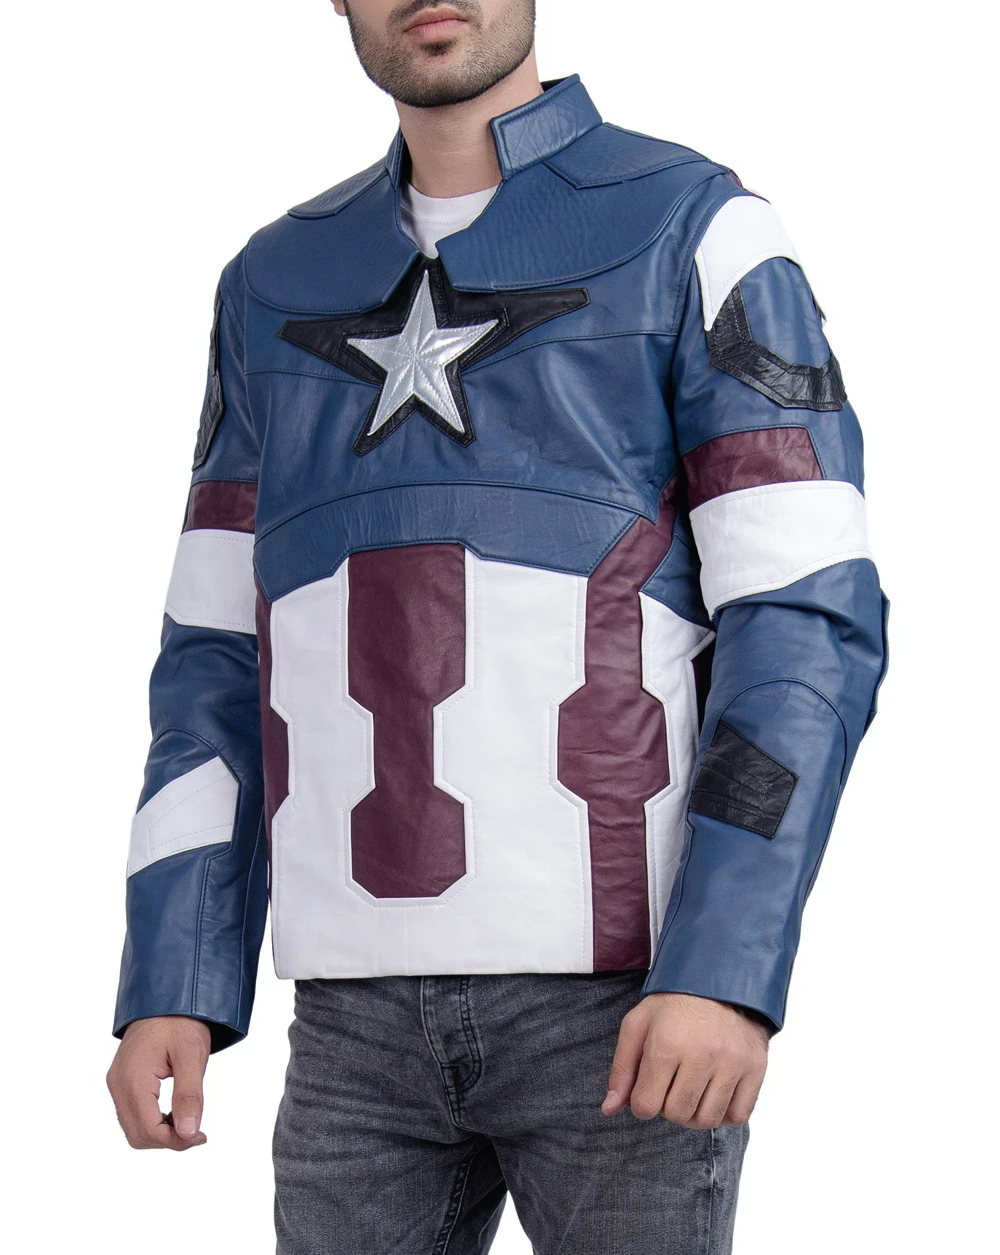 Captain America Jacket